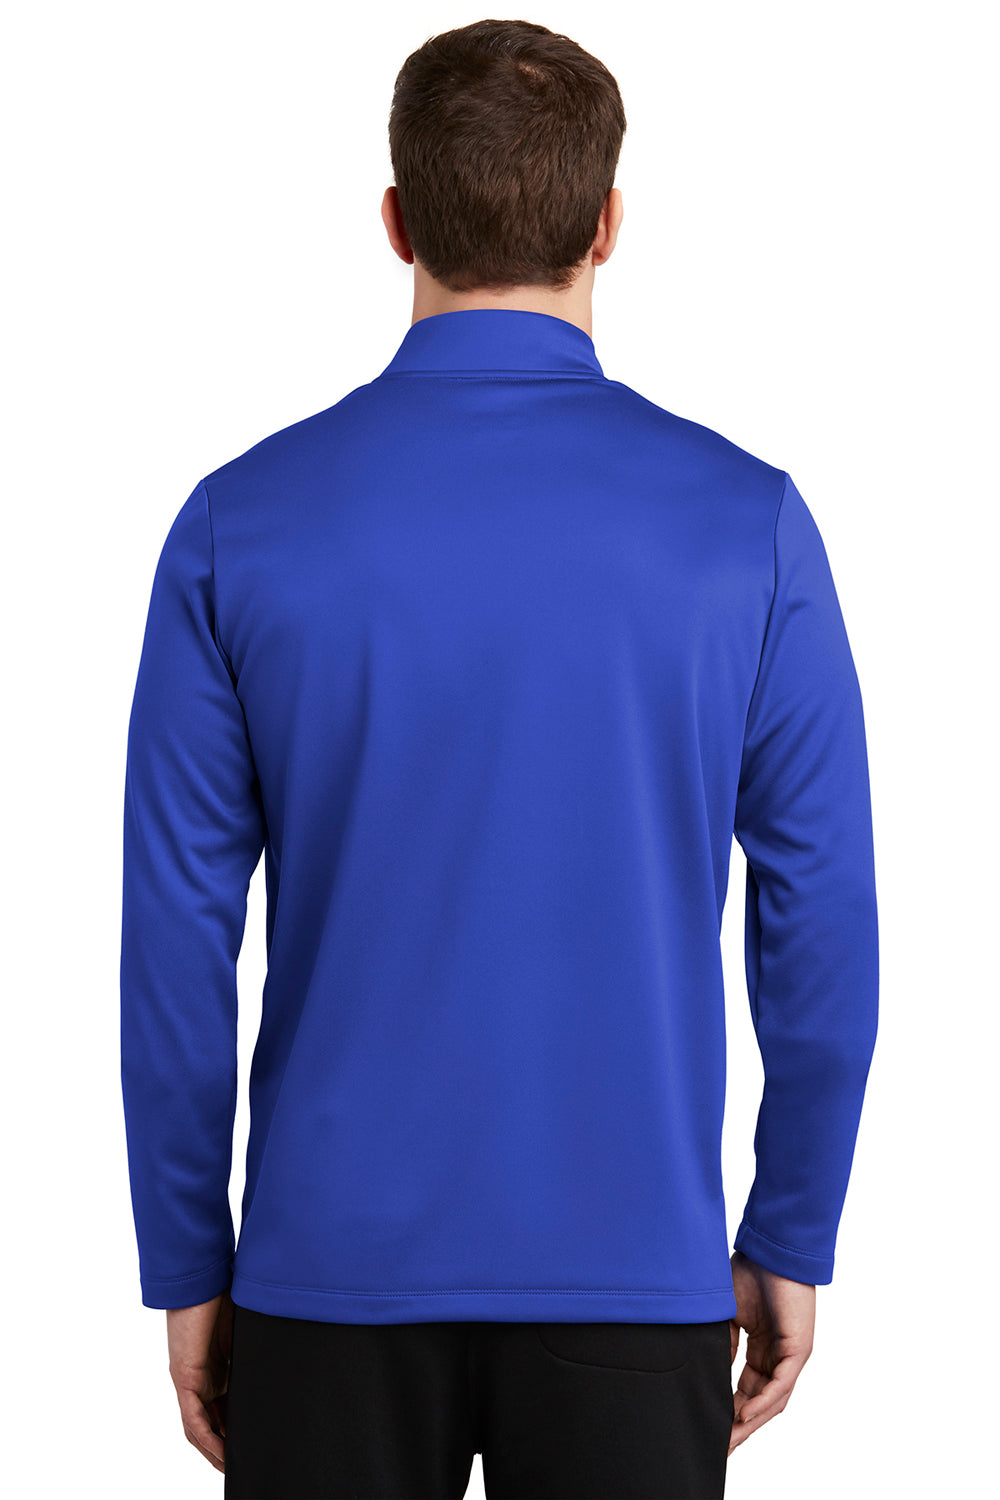 Nike NKAH6418 Mens Therma-Fit Moisture Wicking Fleece Full Zip Sweatshirt Game Royal Blue Model Back